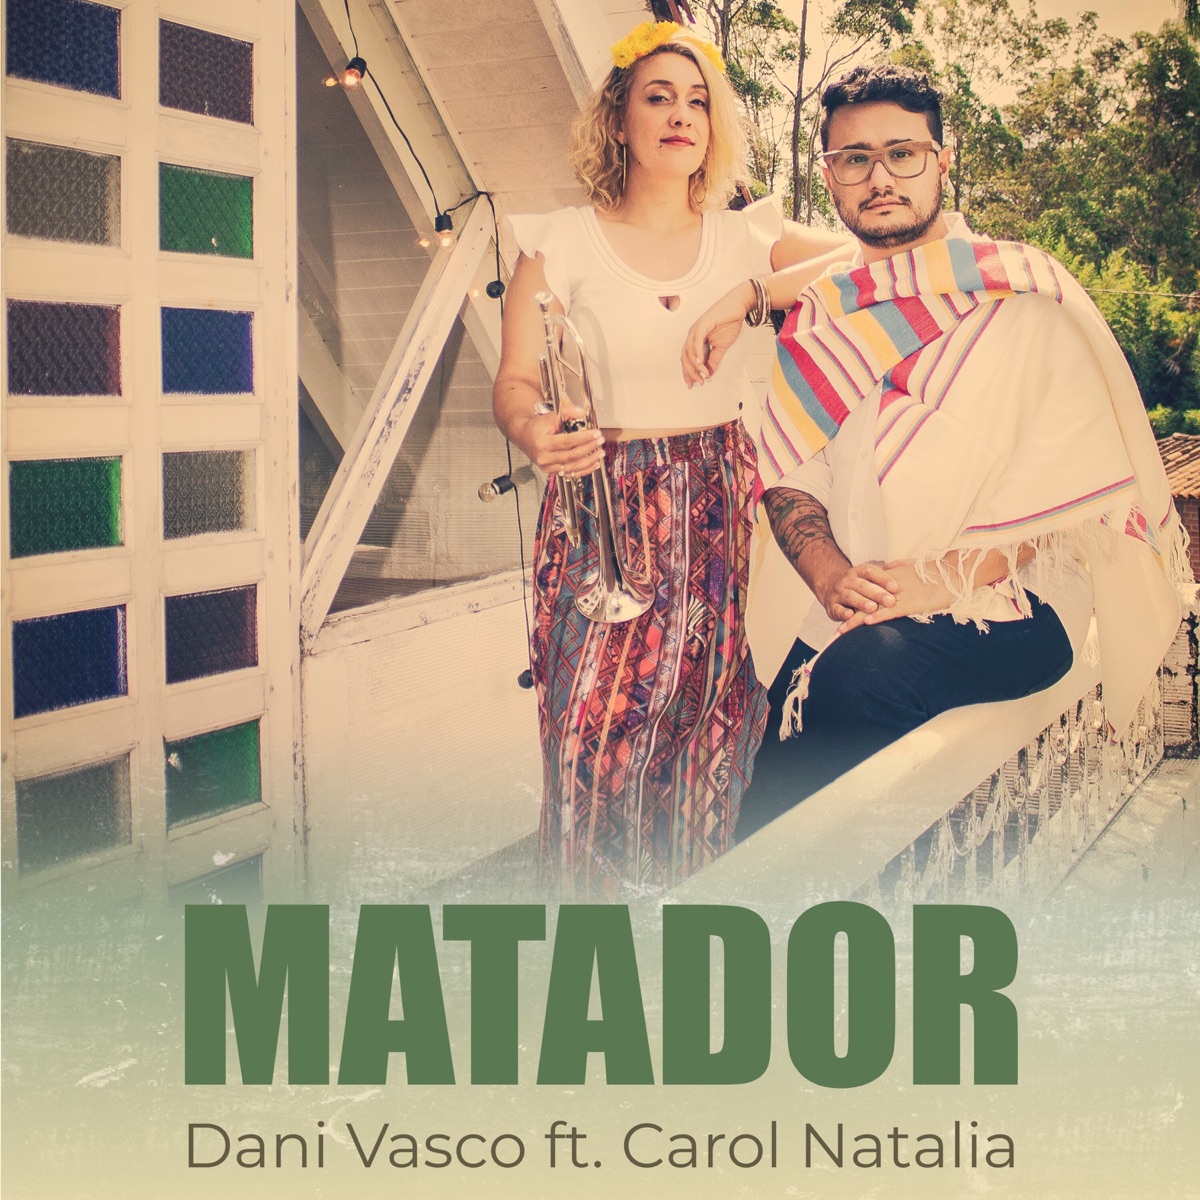 Matador (feat. carol natalia) - Single - Album by Dani Vasco - Apple Music